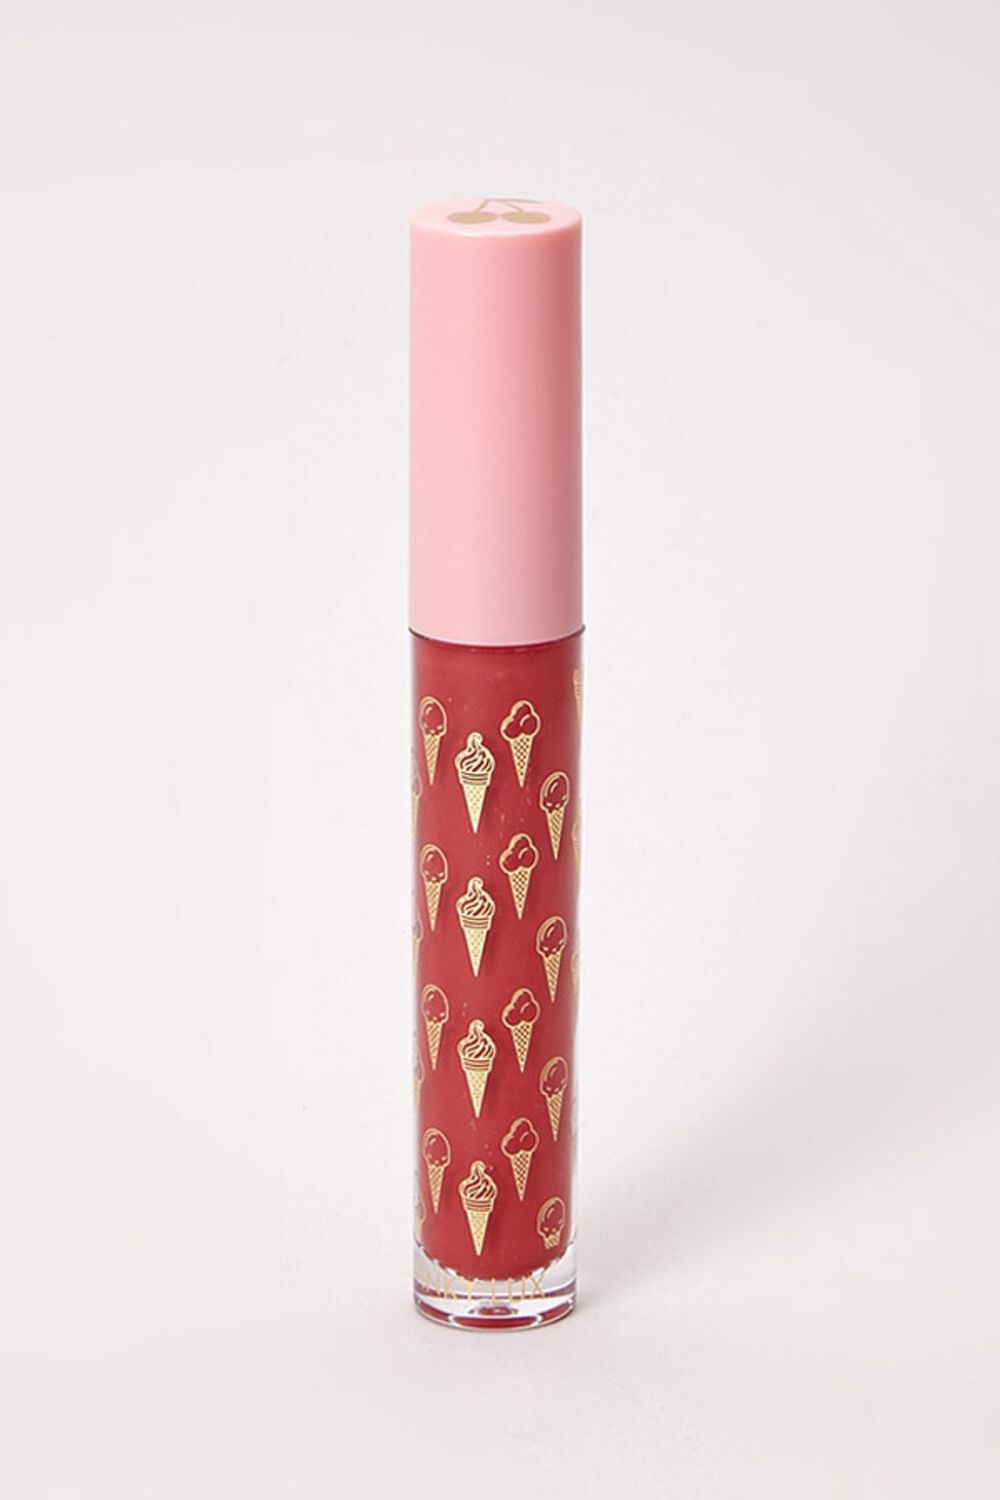 SHORTCAKE Double Matte Whip Liquid Lipstick, image 1